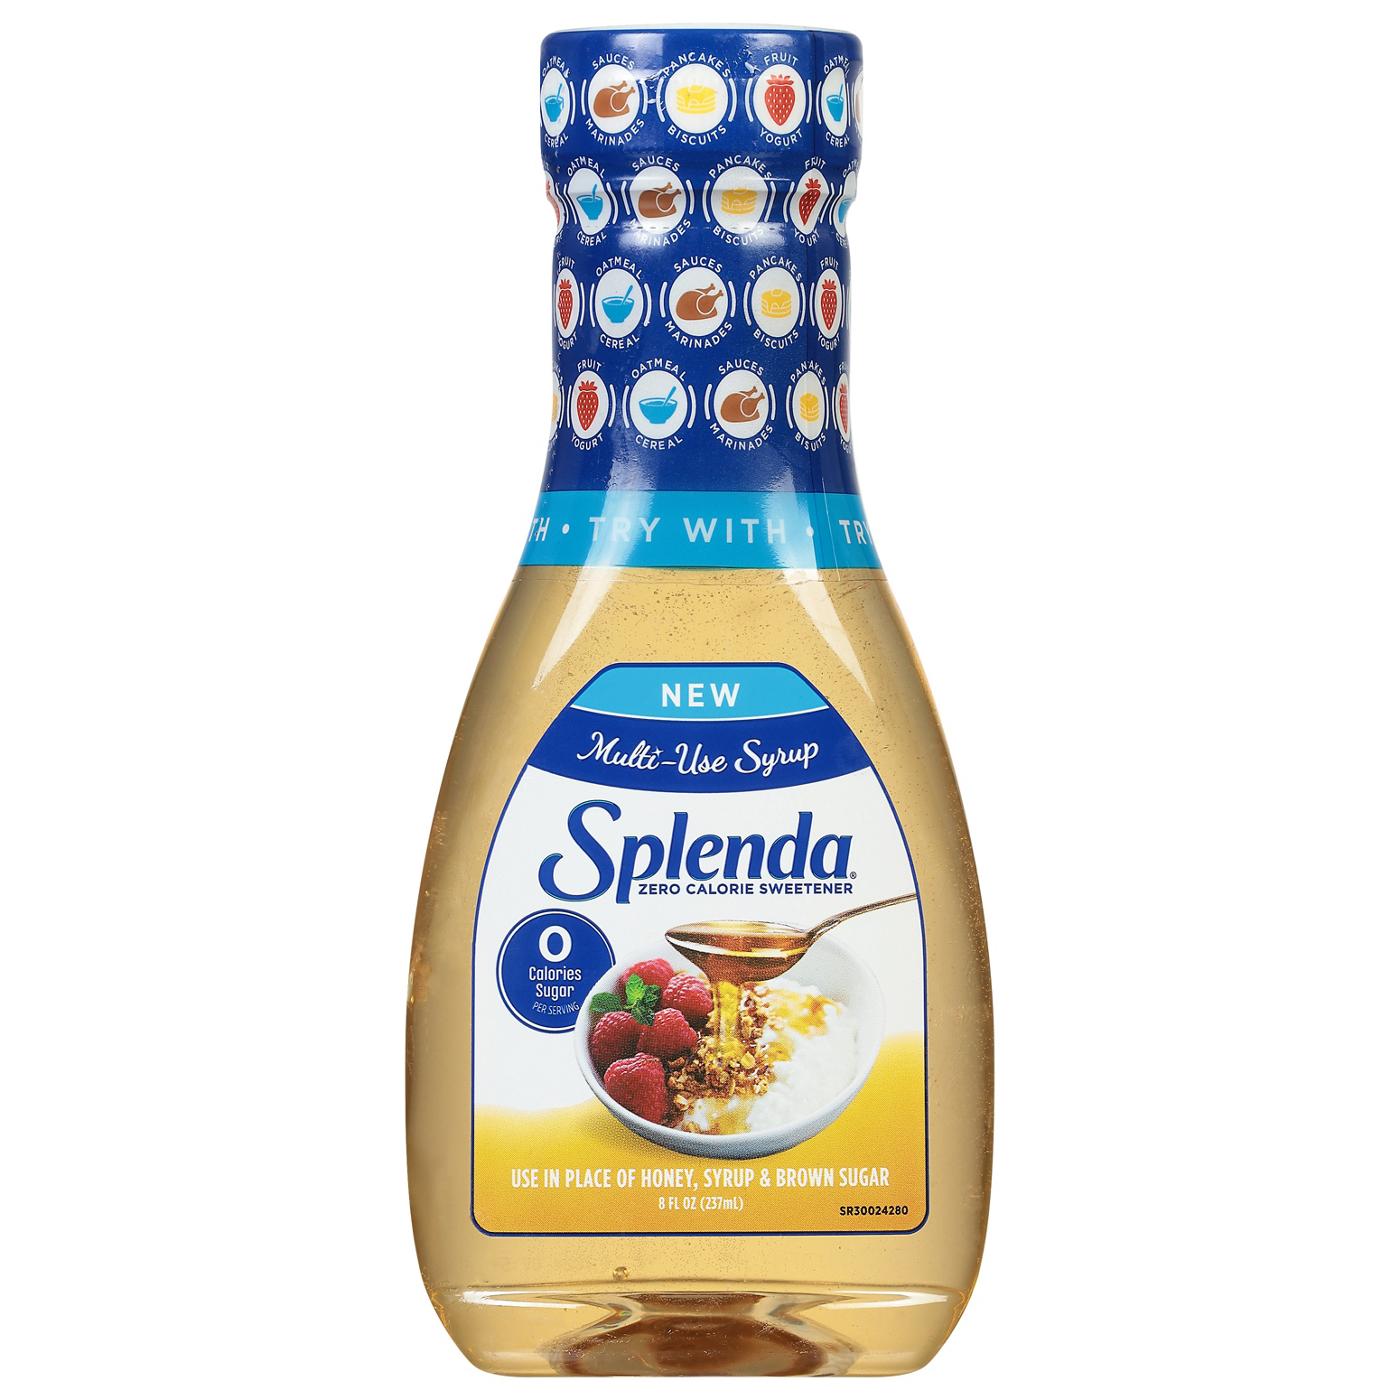 Splenda Multi-Use Syrup; image 1 of 2